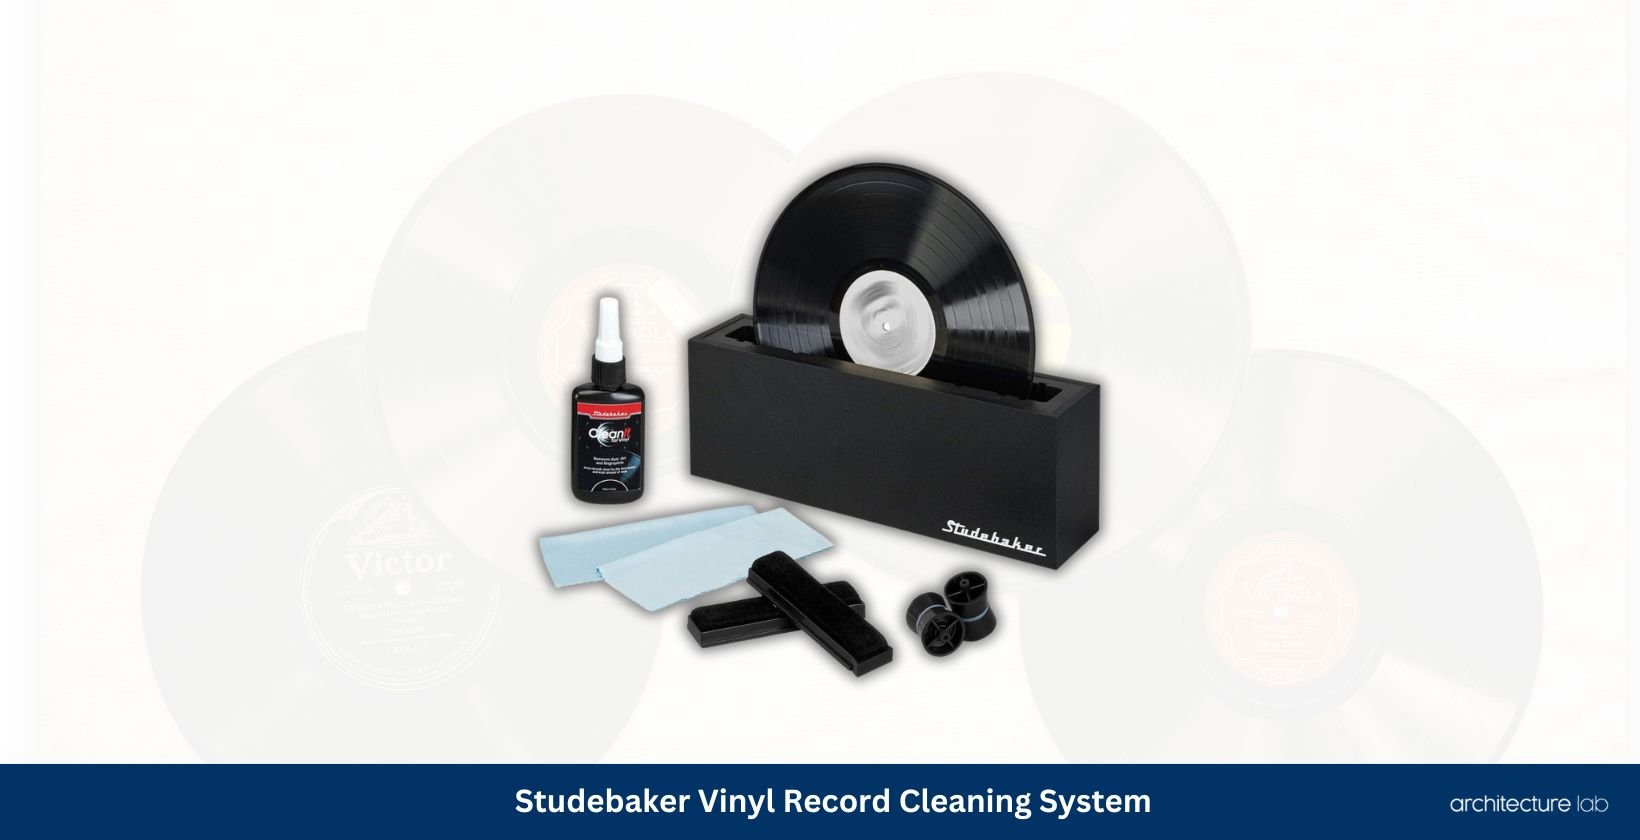 Studebaker vinyl record cleaning system